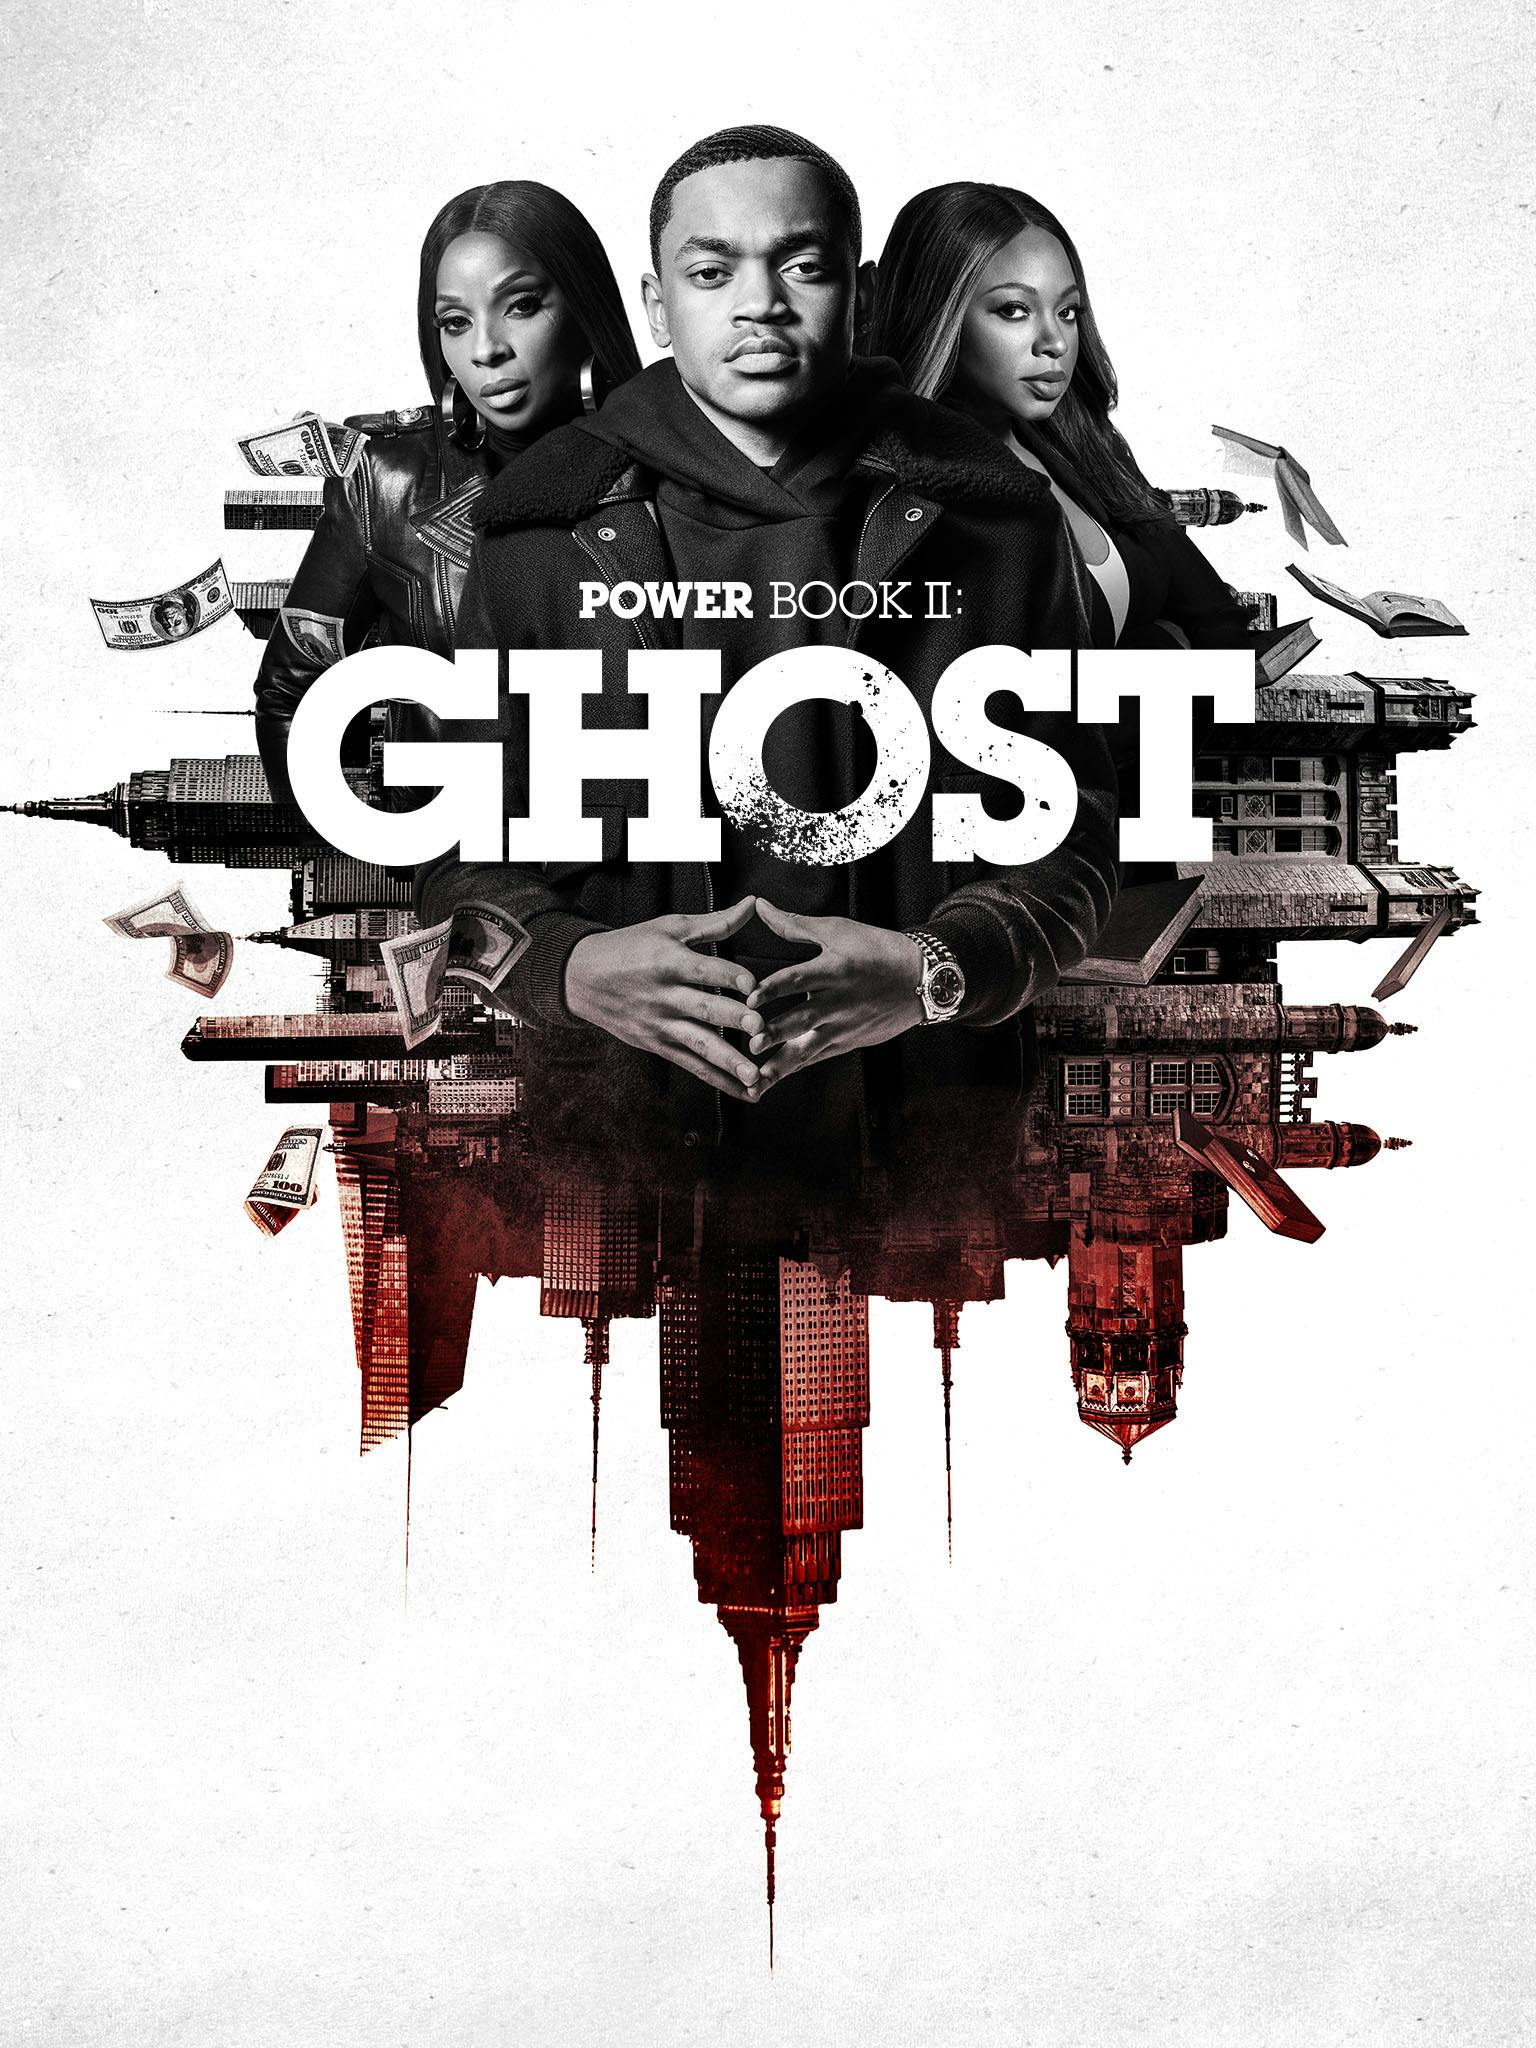 Watch Power Book II: Ghost Online: Stream Full Series on STARZ